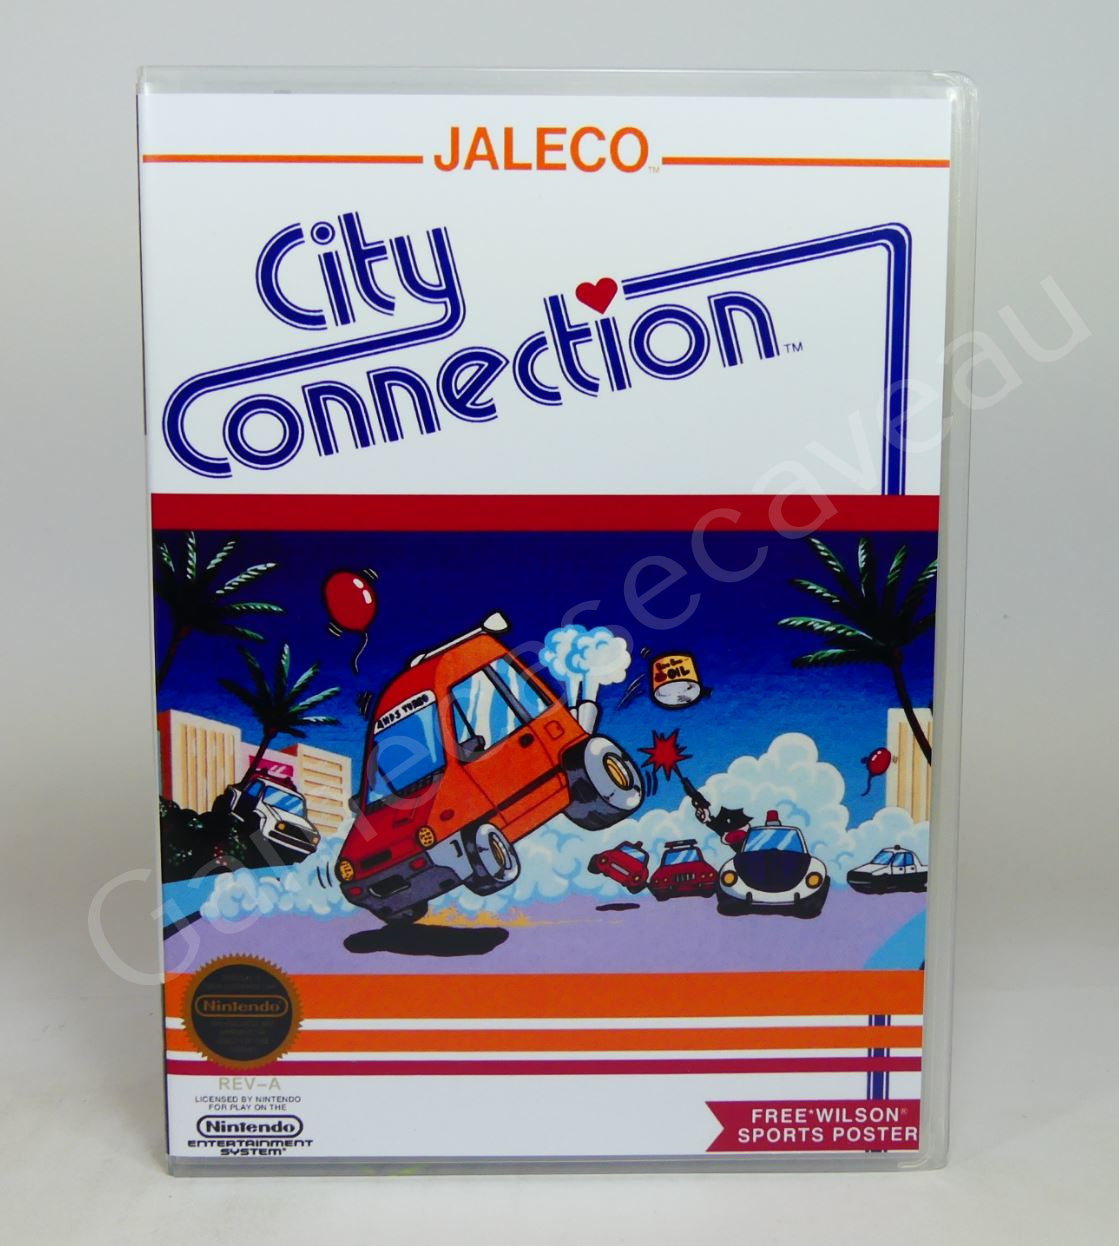 City Connection - NES Replacement Case